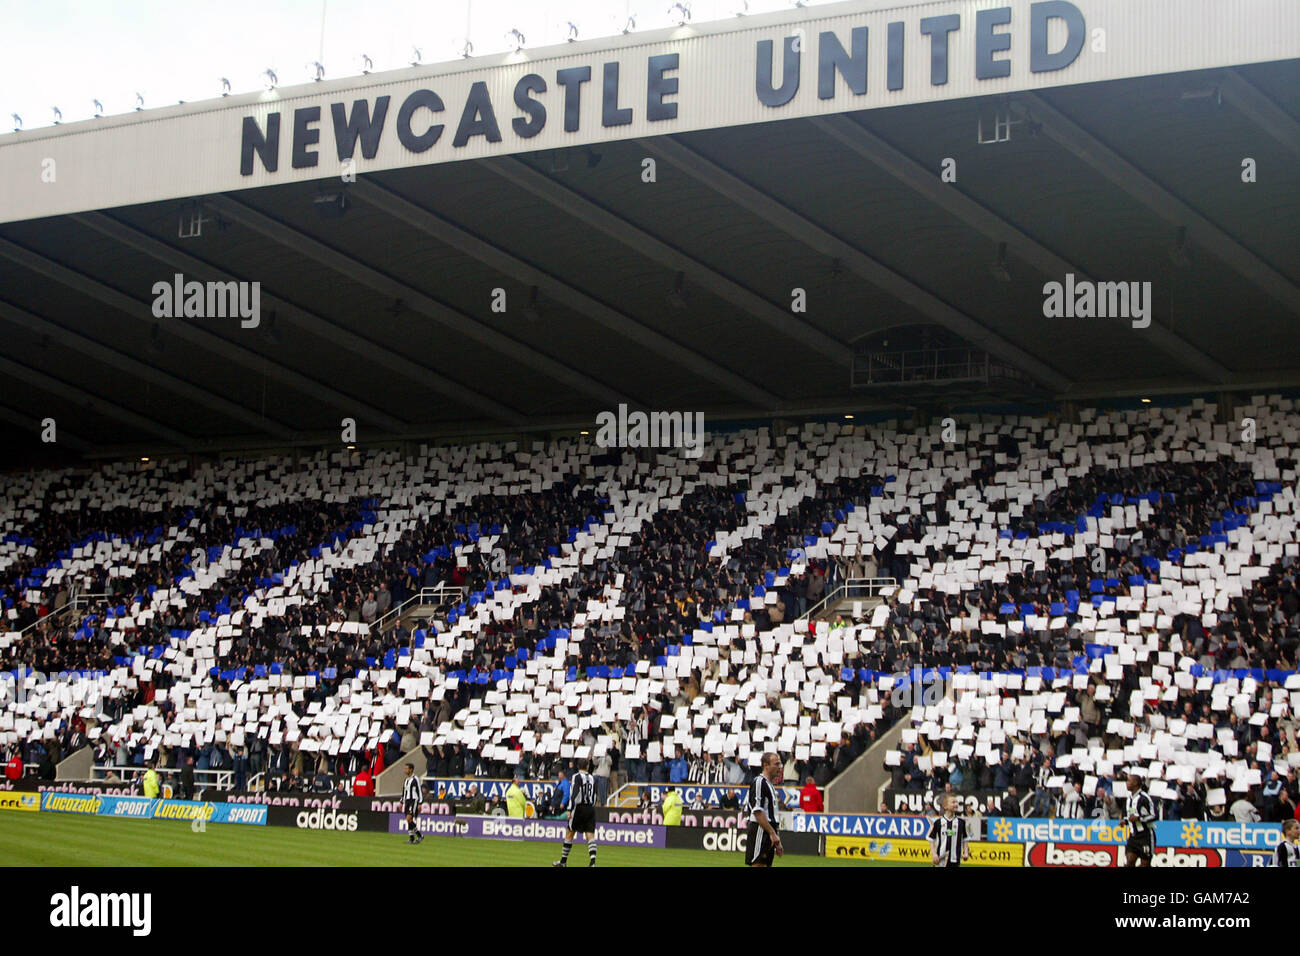 Fútbol - Fa Barclaycard Premiership - Newcastle United v Arsenal. Los fans de Newcastle United crean un logotipo 'Toon 2003' Foto de stock